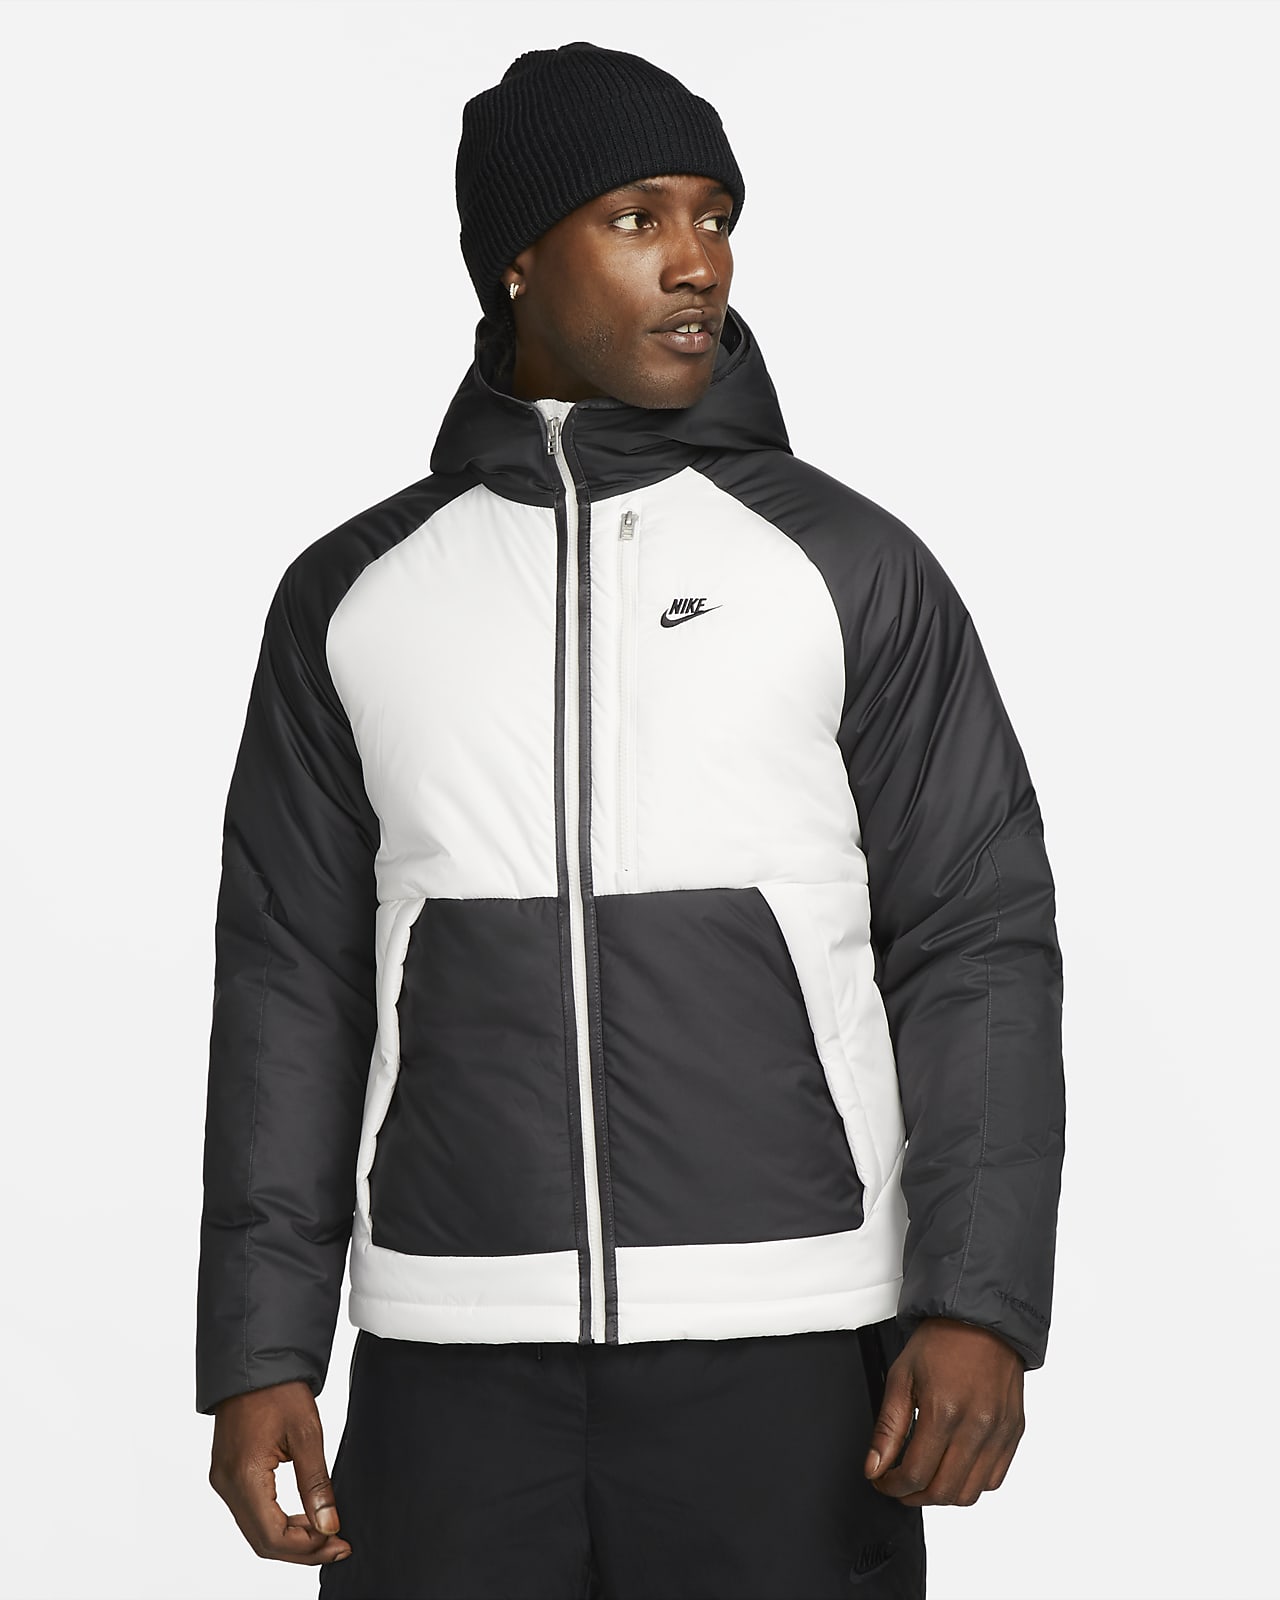 Áo khoác Nike Sleeve Solid Sports Jacket 